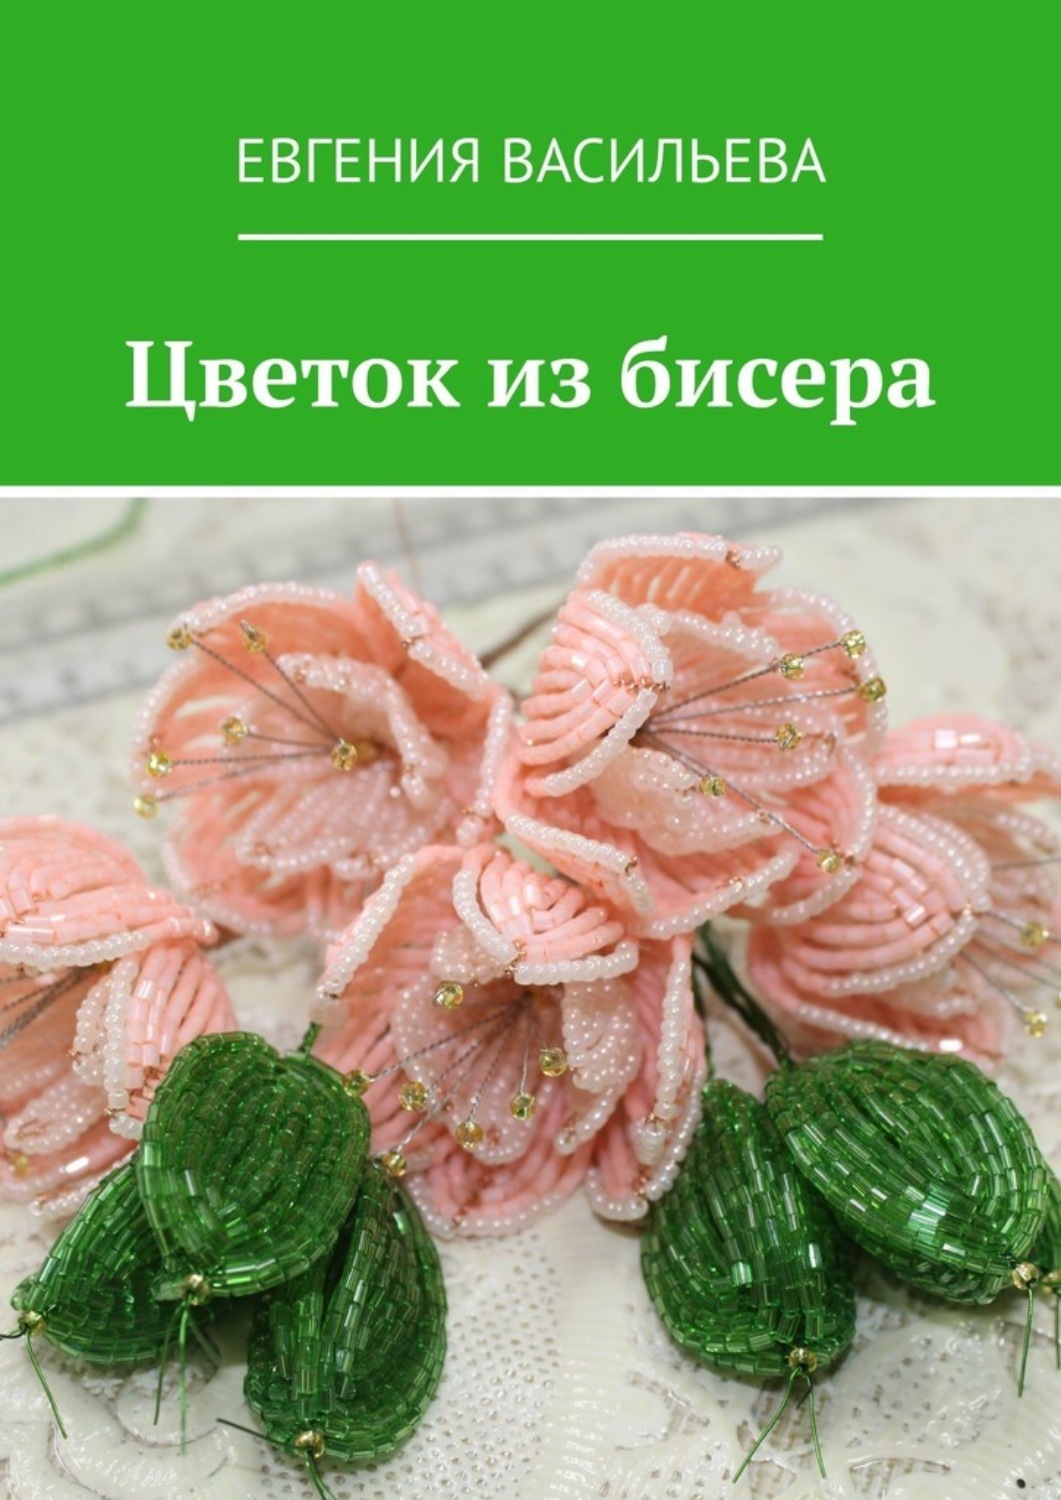 Цветок из бисера, Евгения Васильева – скачать книгу fb2, epub, pdf на Литрес